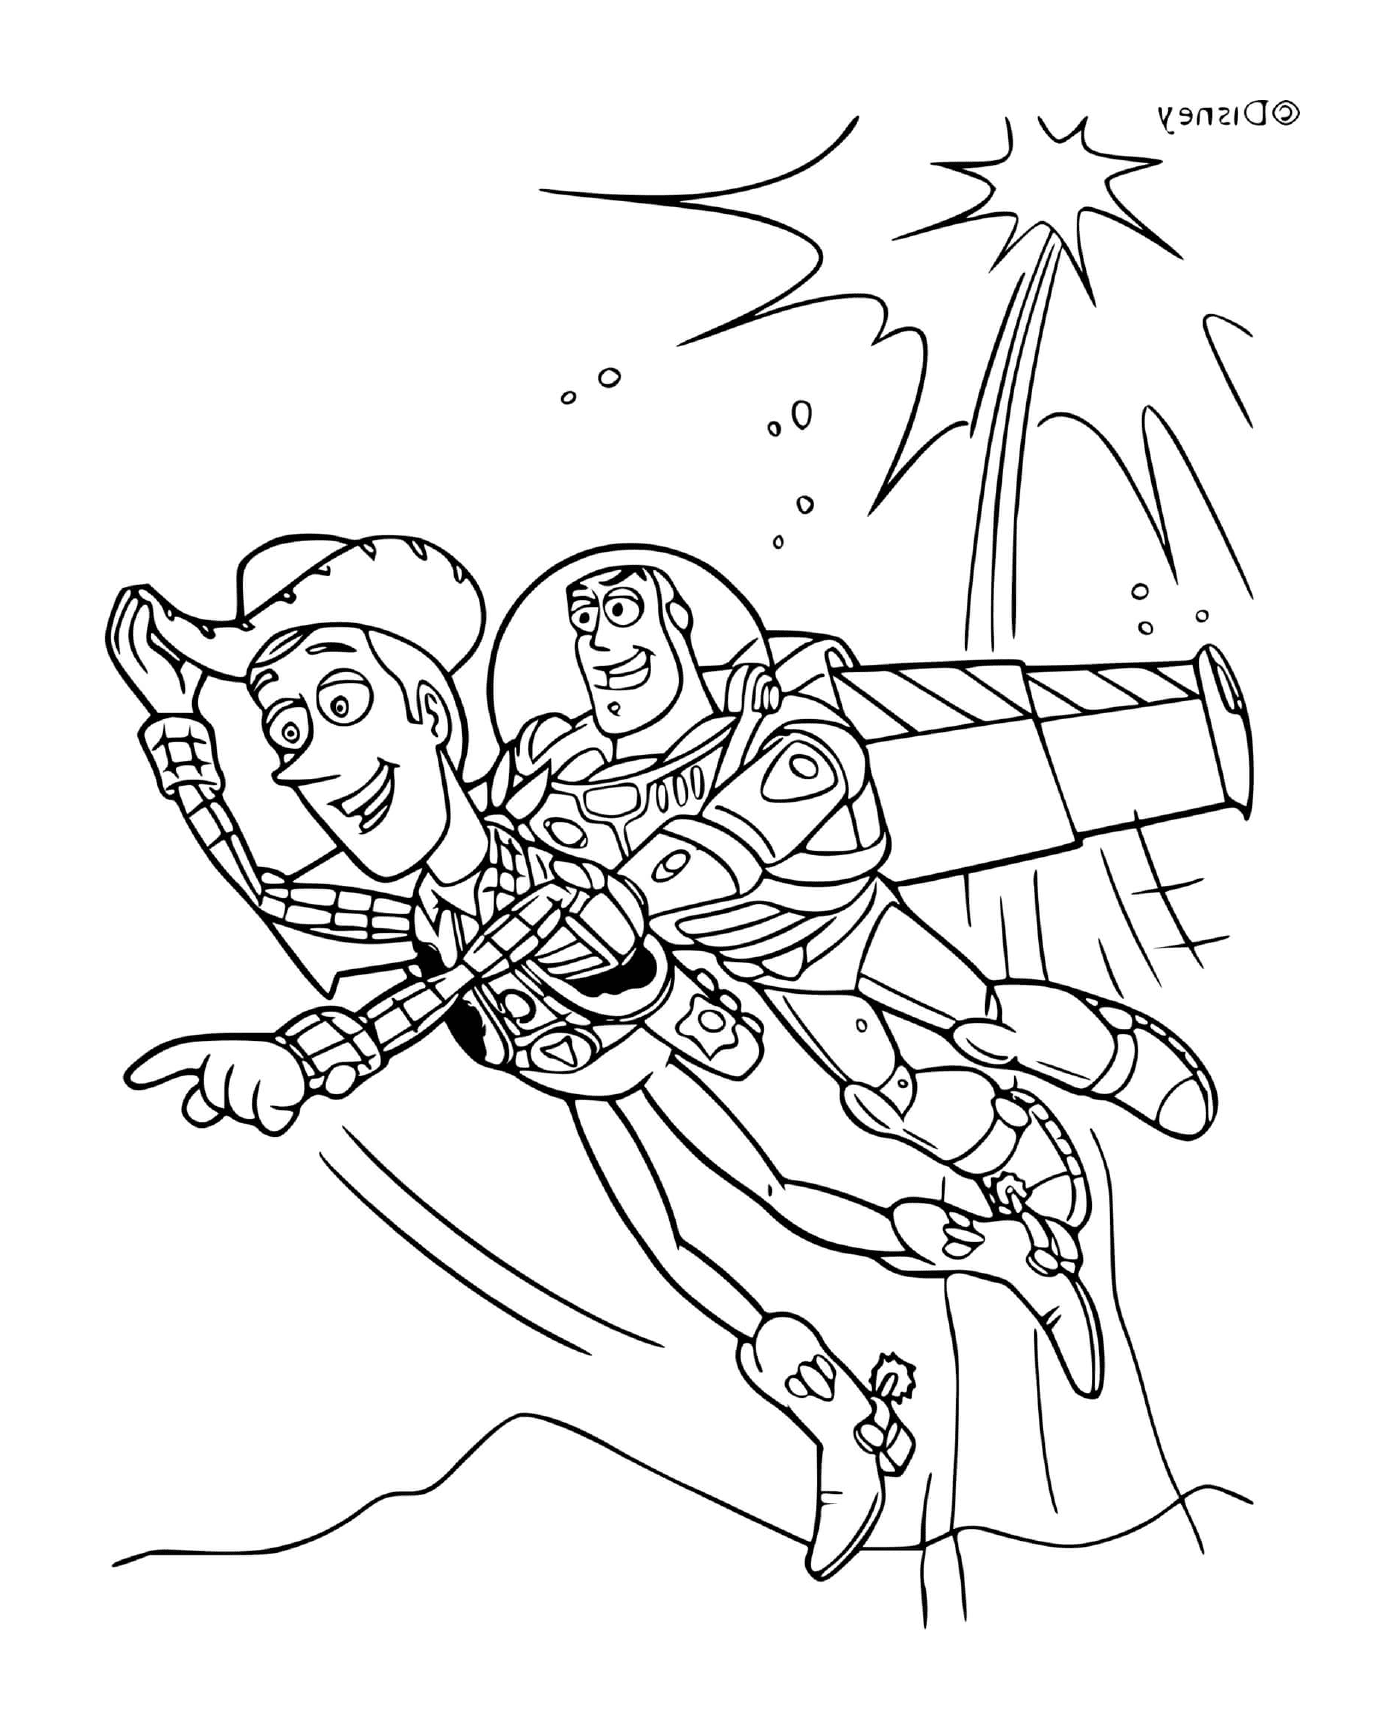  Buzz fulmine vola con Woody 